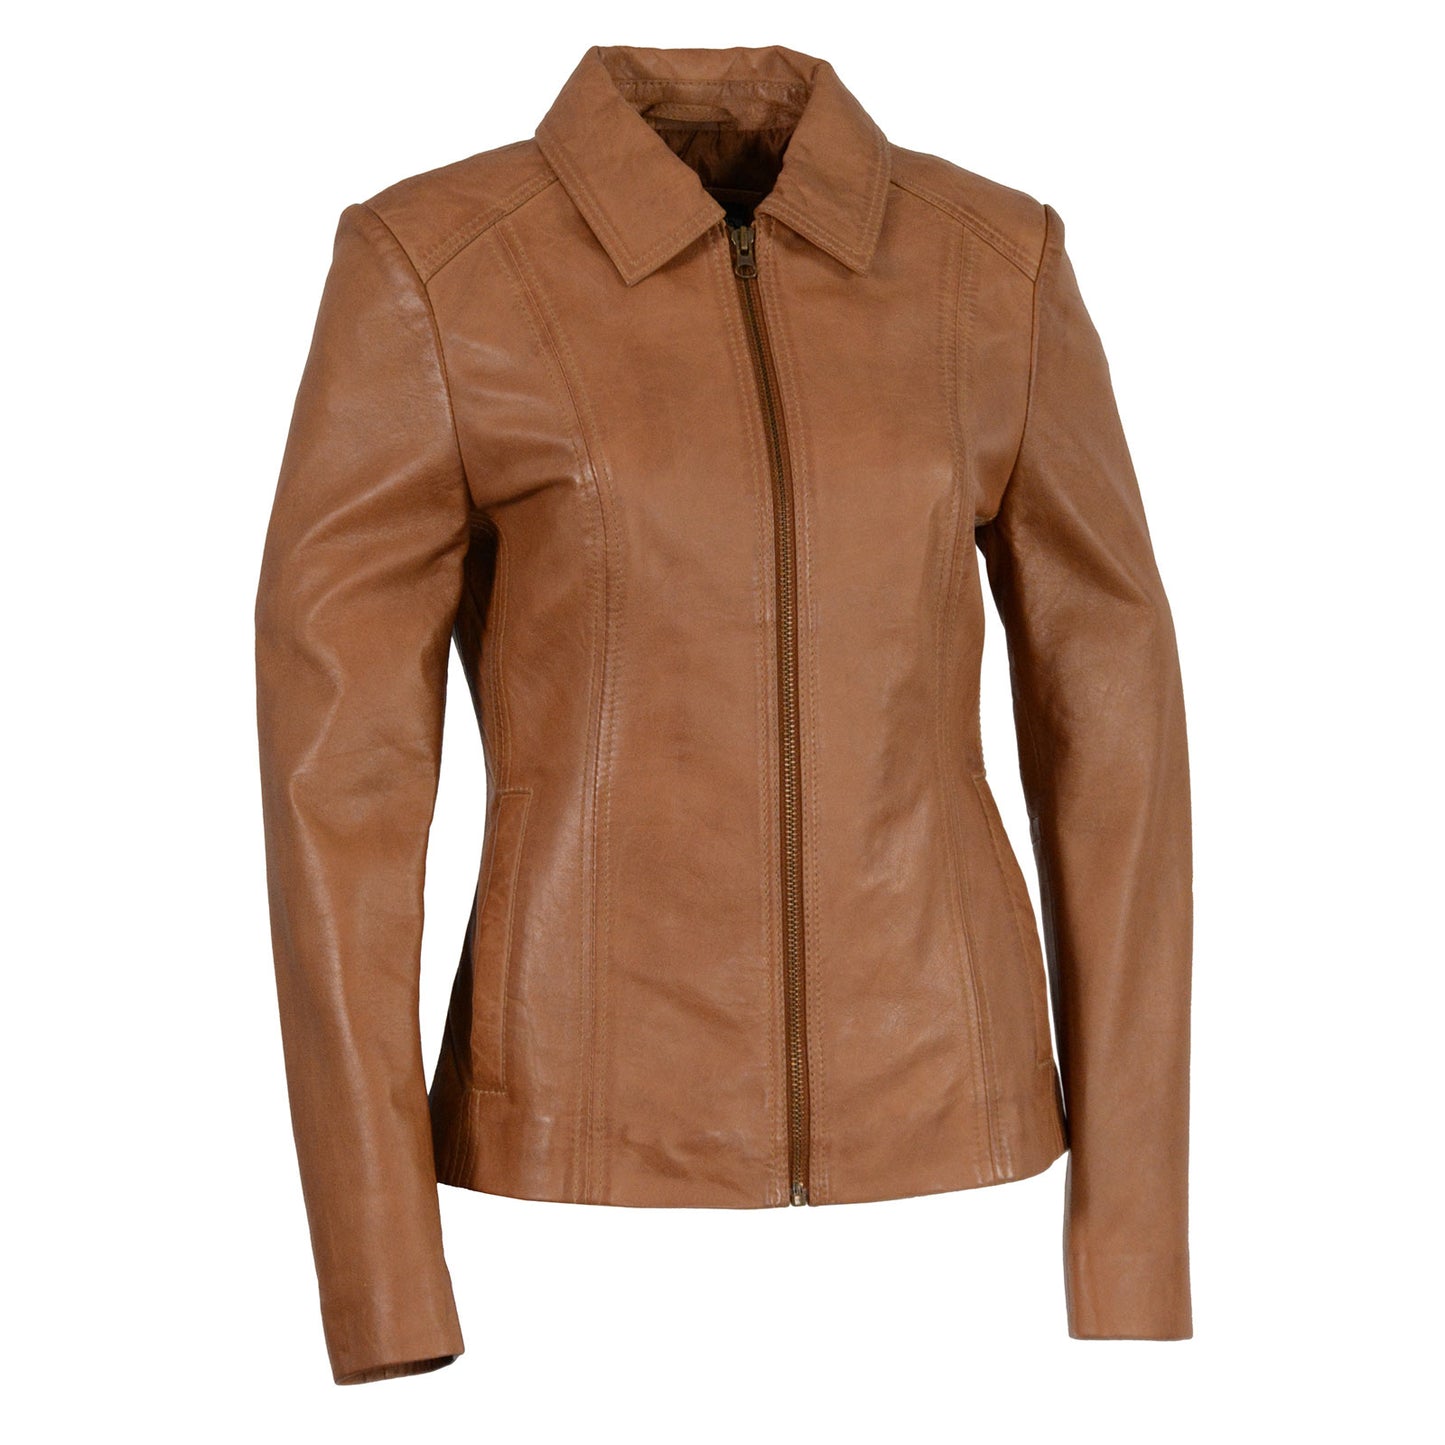 Milwaukee Leather SFL2850 Women's Classic Saddle Zippered Motorcycle Style Fashion Leather Jacket with Shirt Style Collar